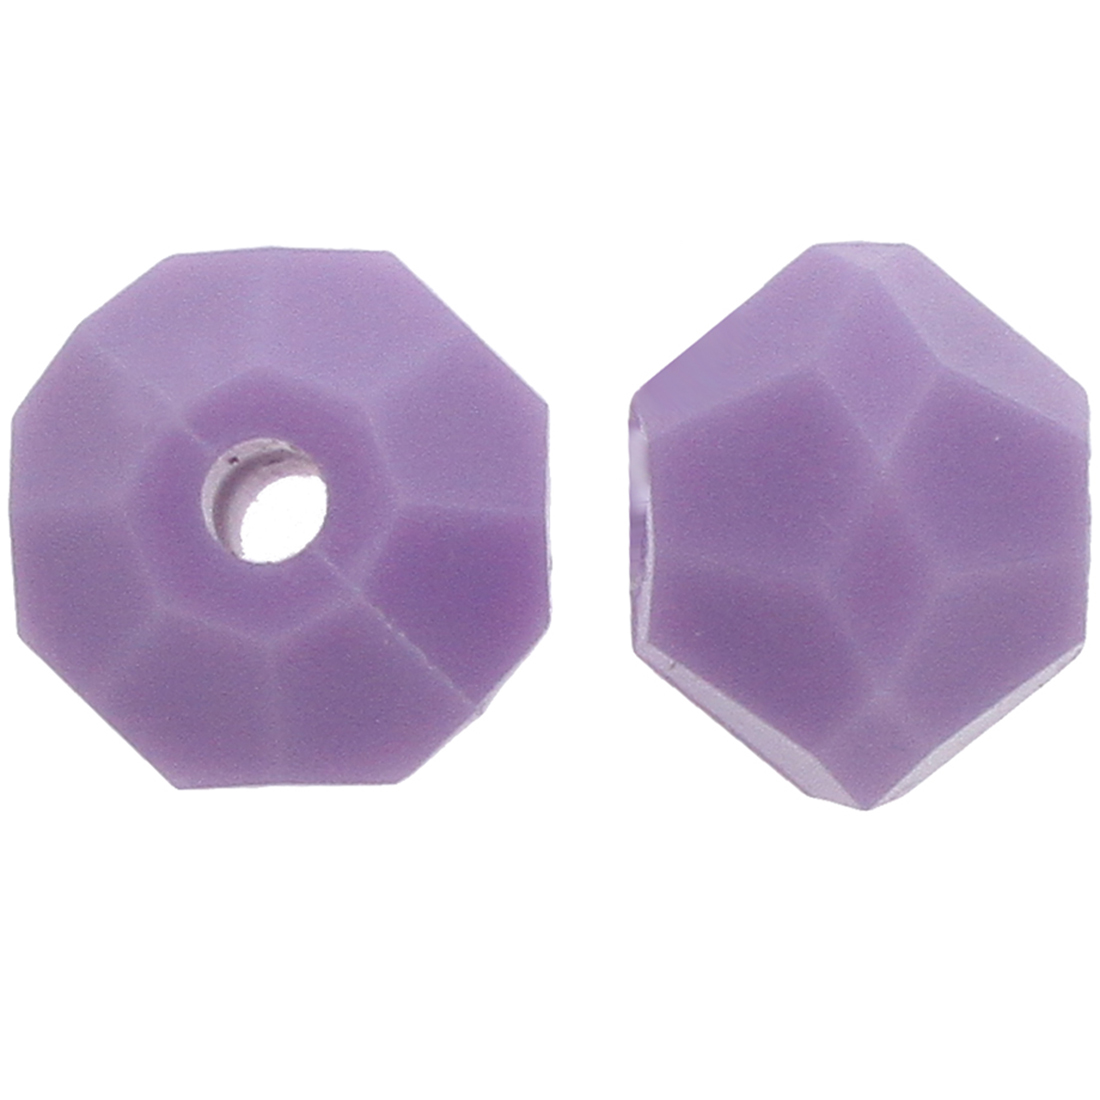 1 purple